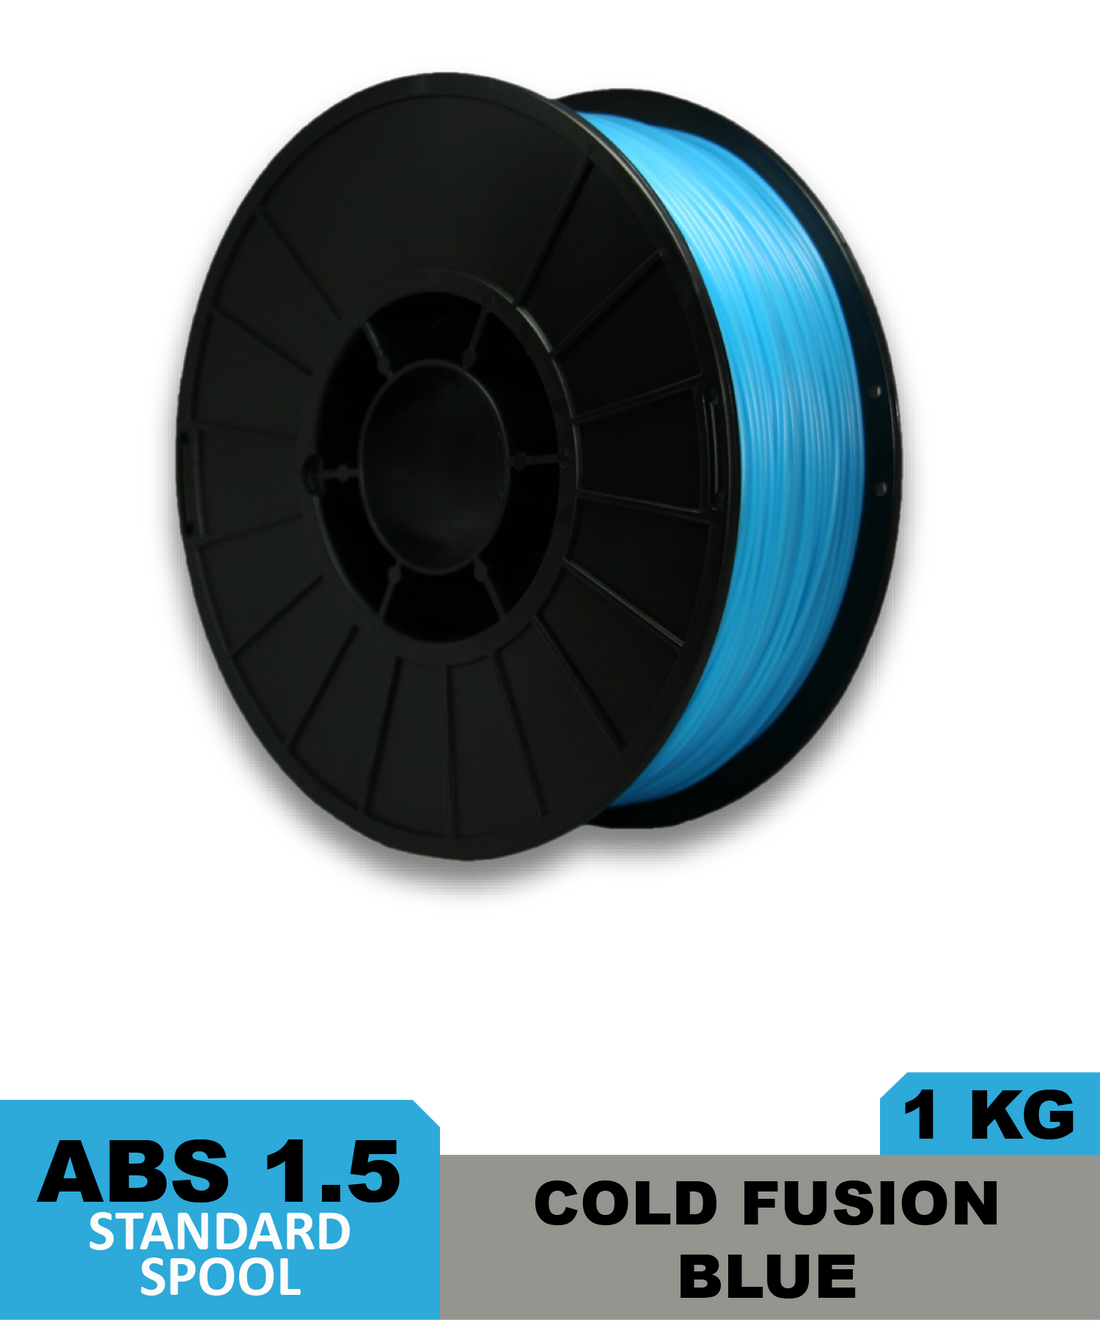 Fusion Filament ABS 1.5 Cold Fusion Blue 1KG